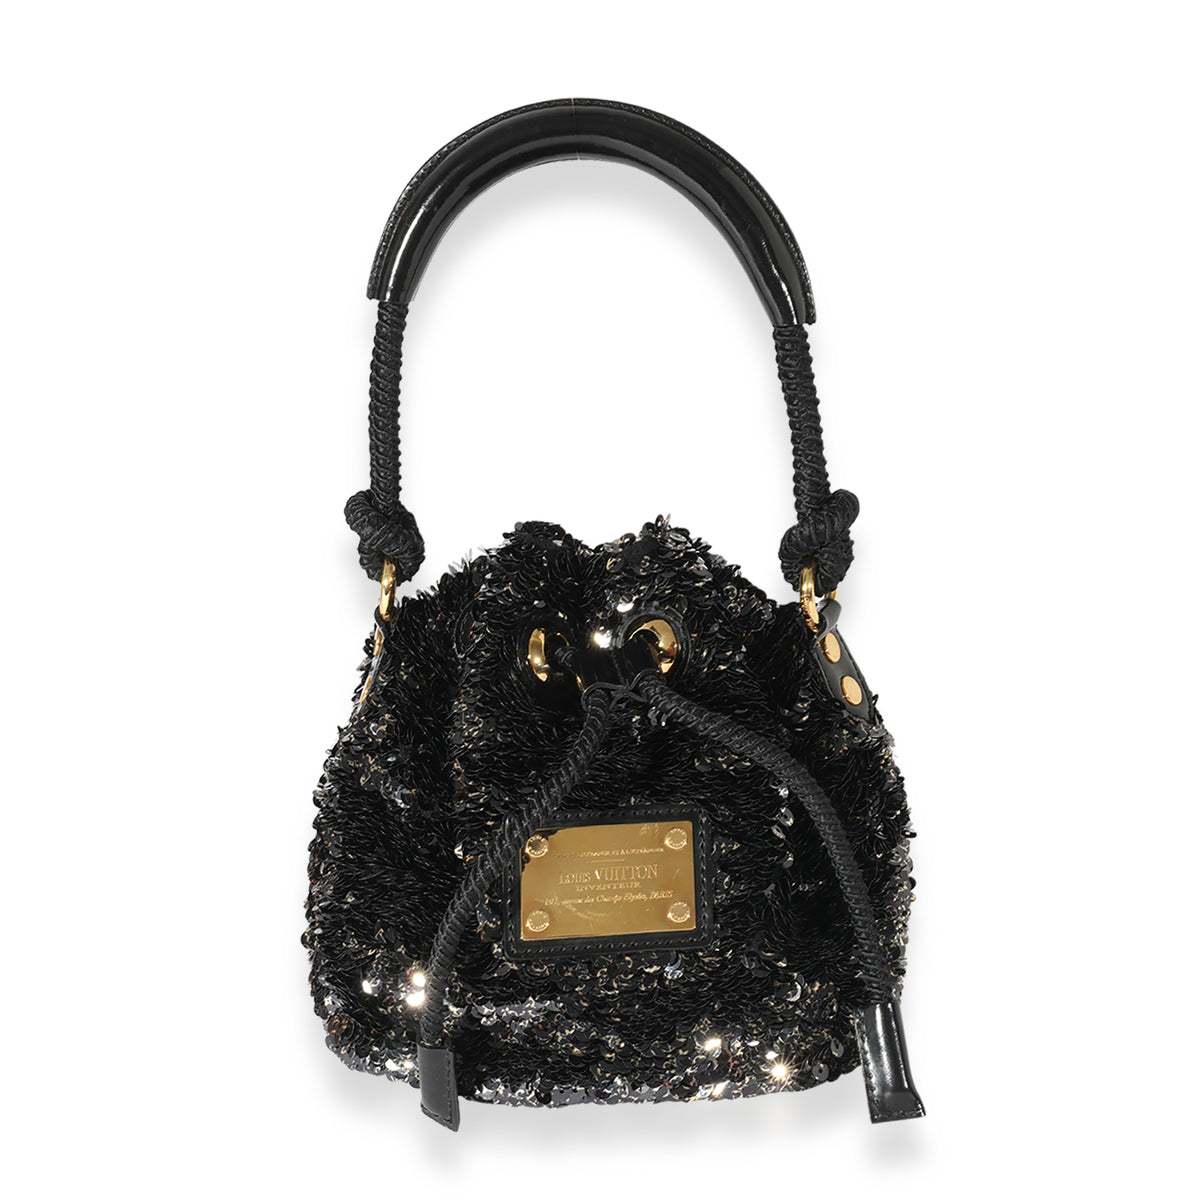 Louis Vuitton Sequin Bags & Handbags for Women, Authenticity Guaranteed